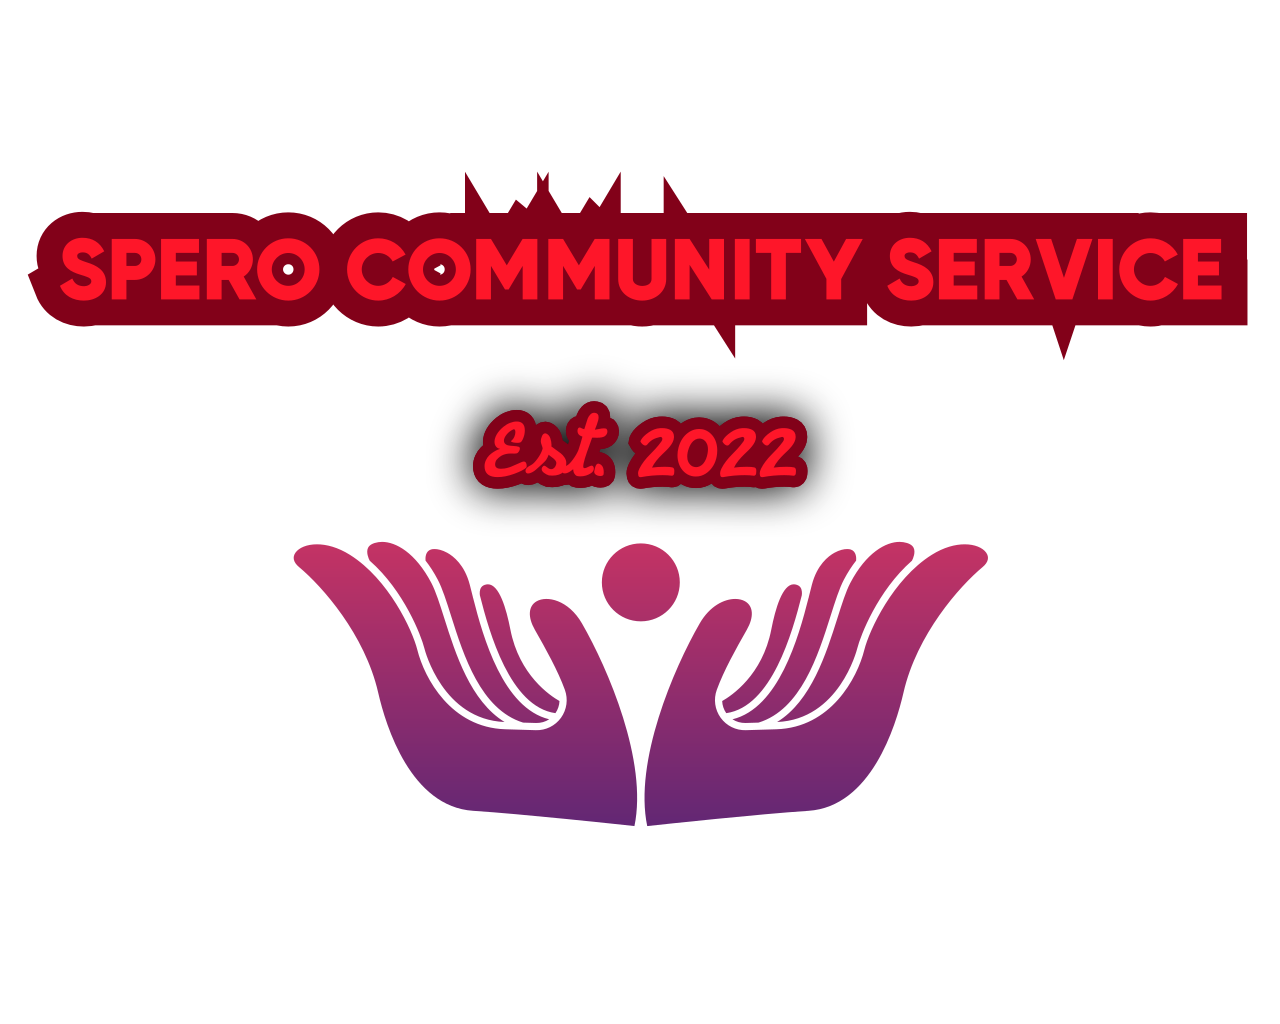 Spero Community Service 's logo